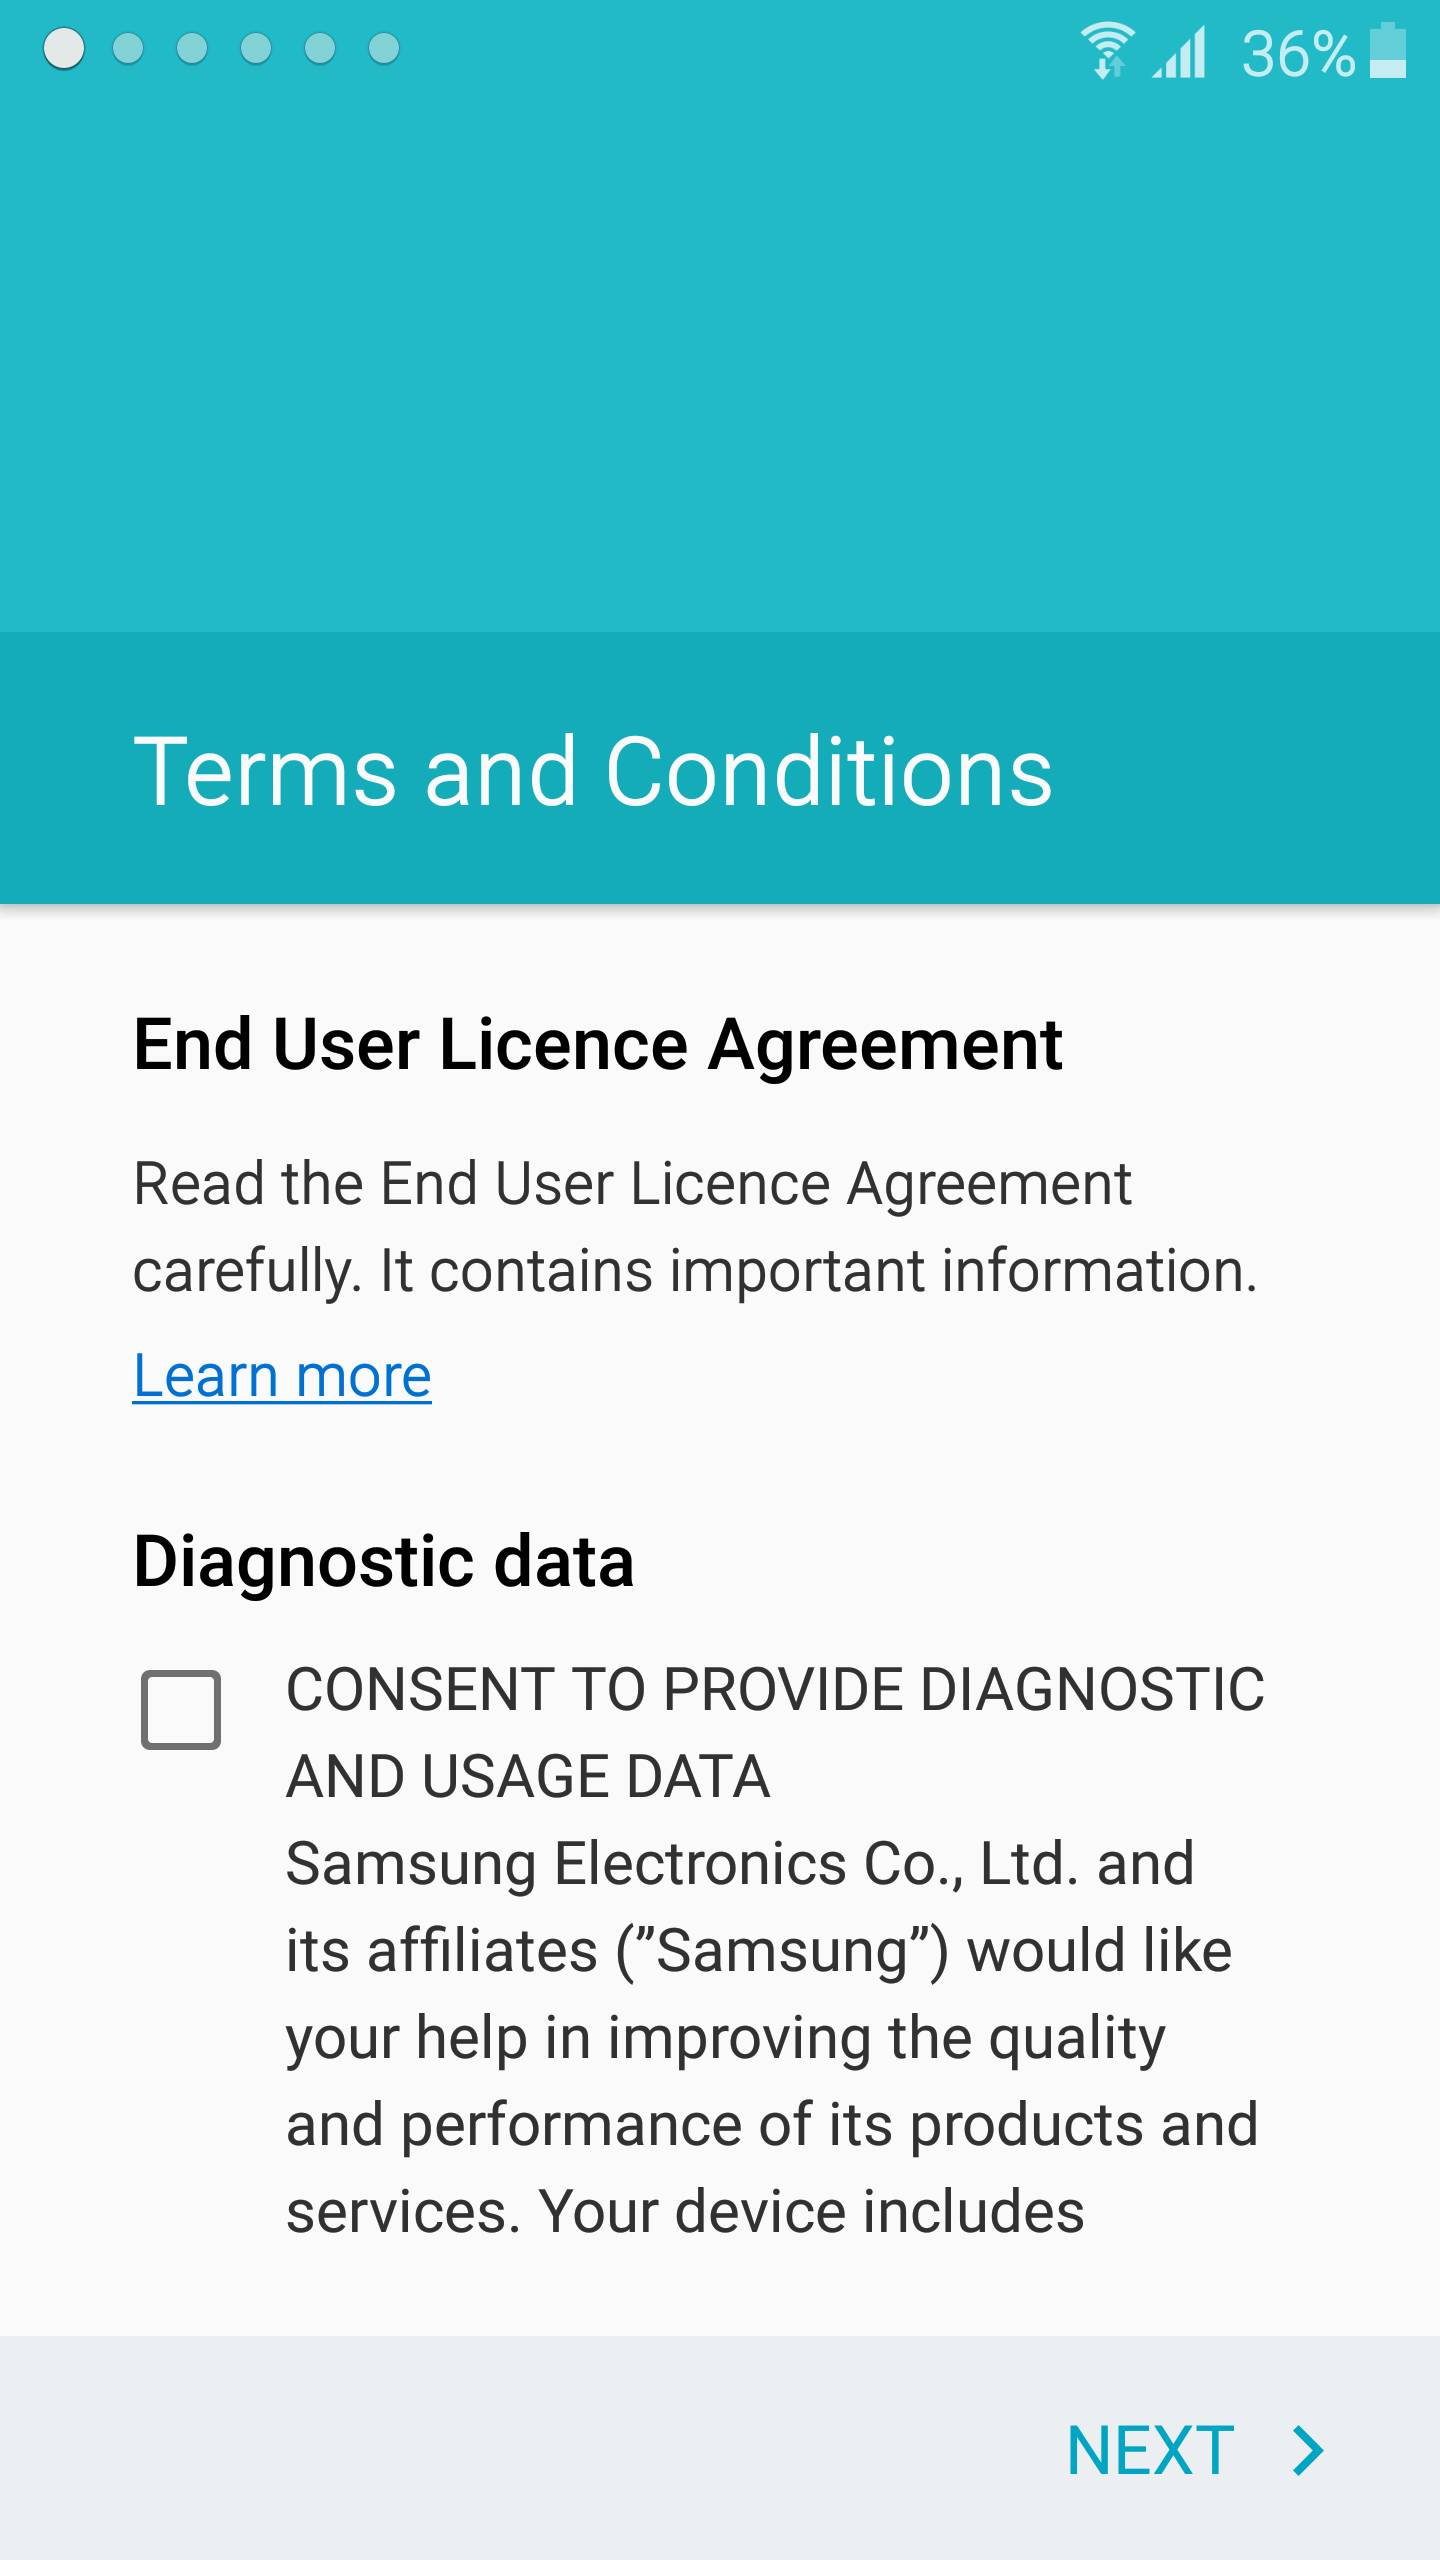 Galaxy S6 EULA agreement